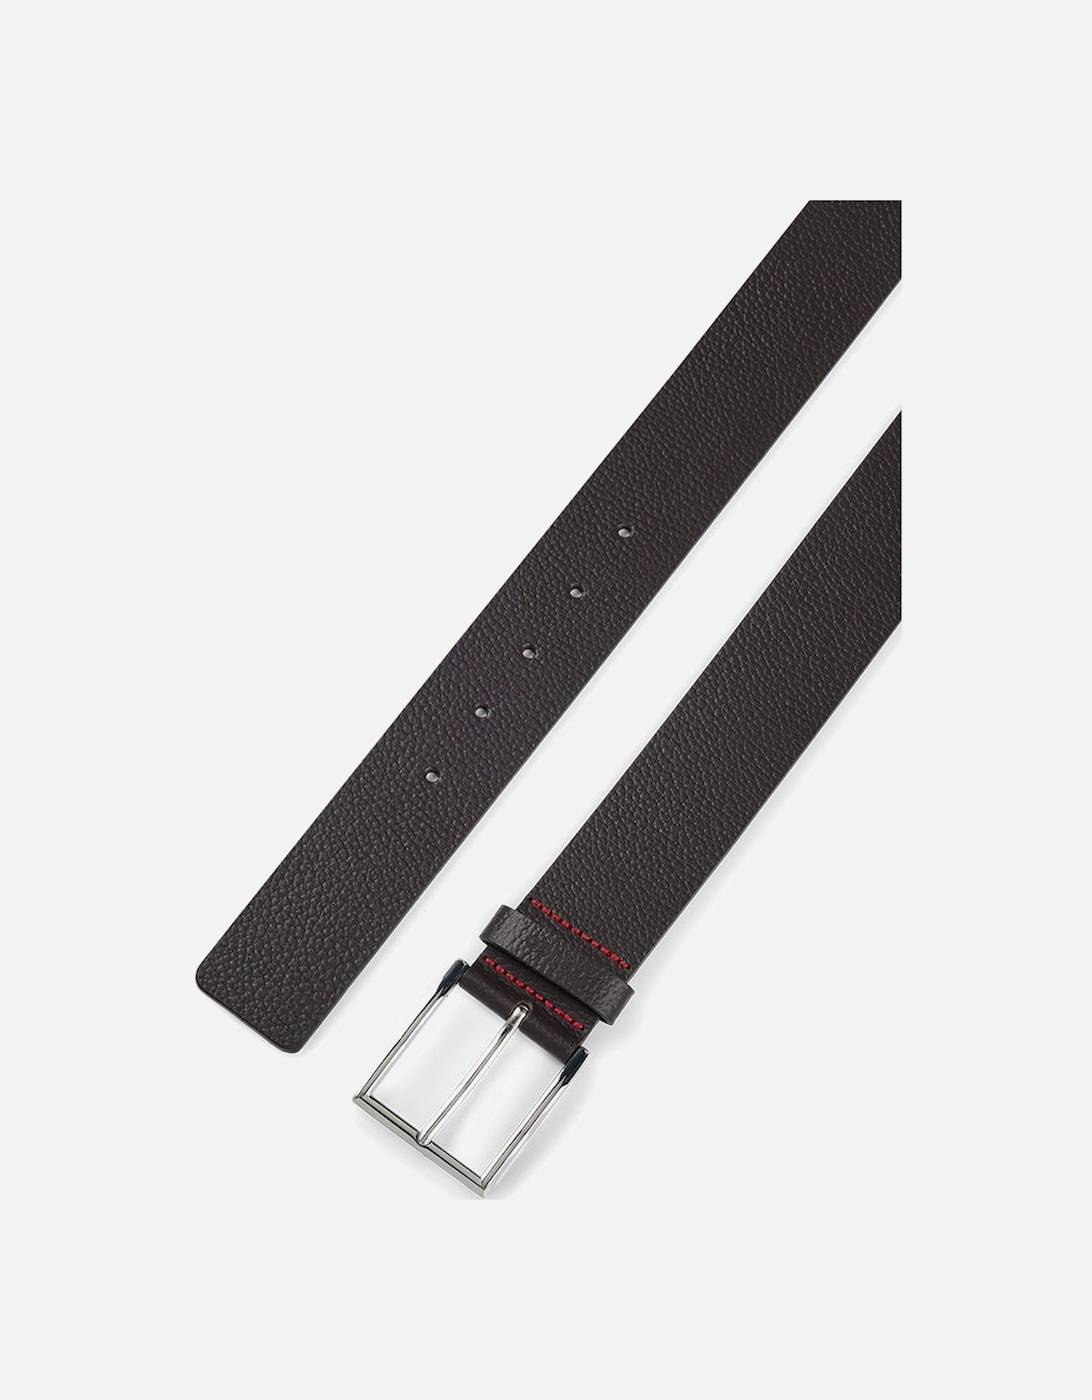 Giaspo Vintage Leather Belt, Dark Brown